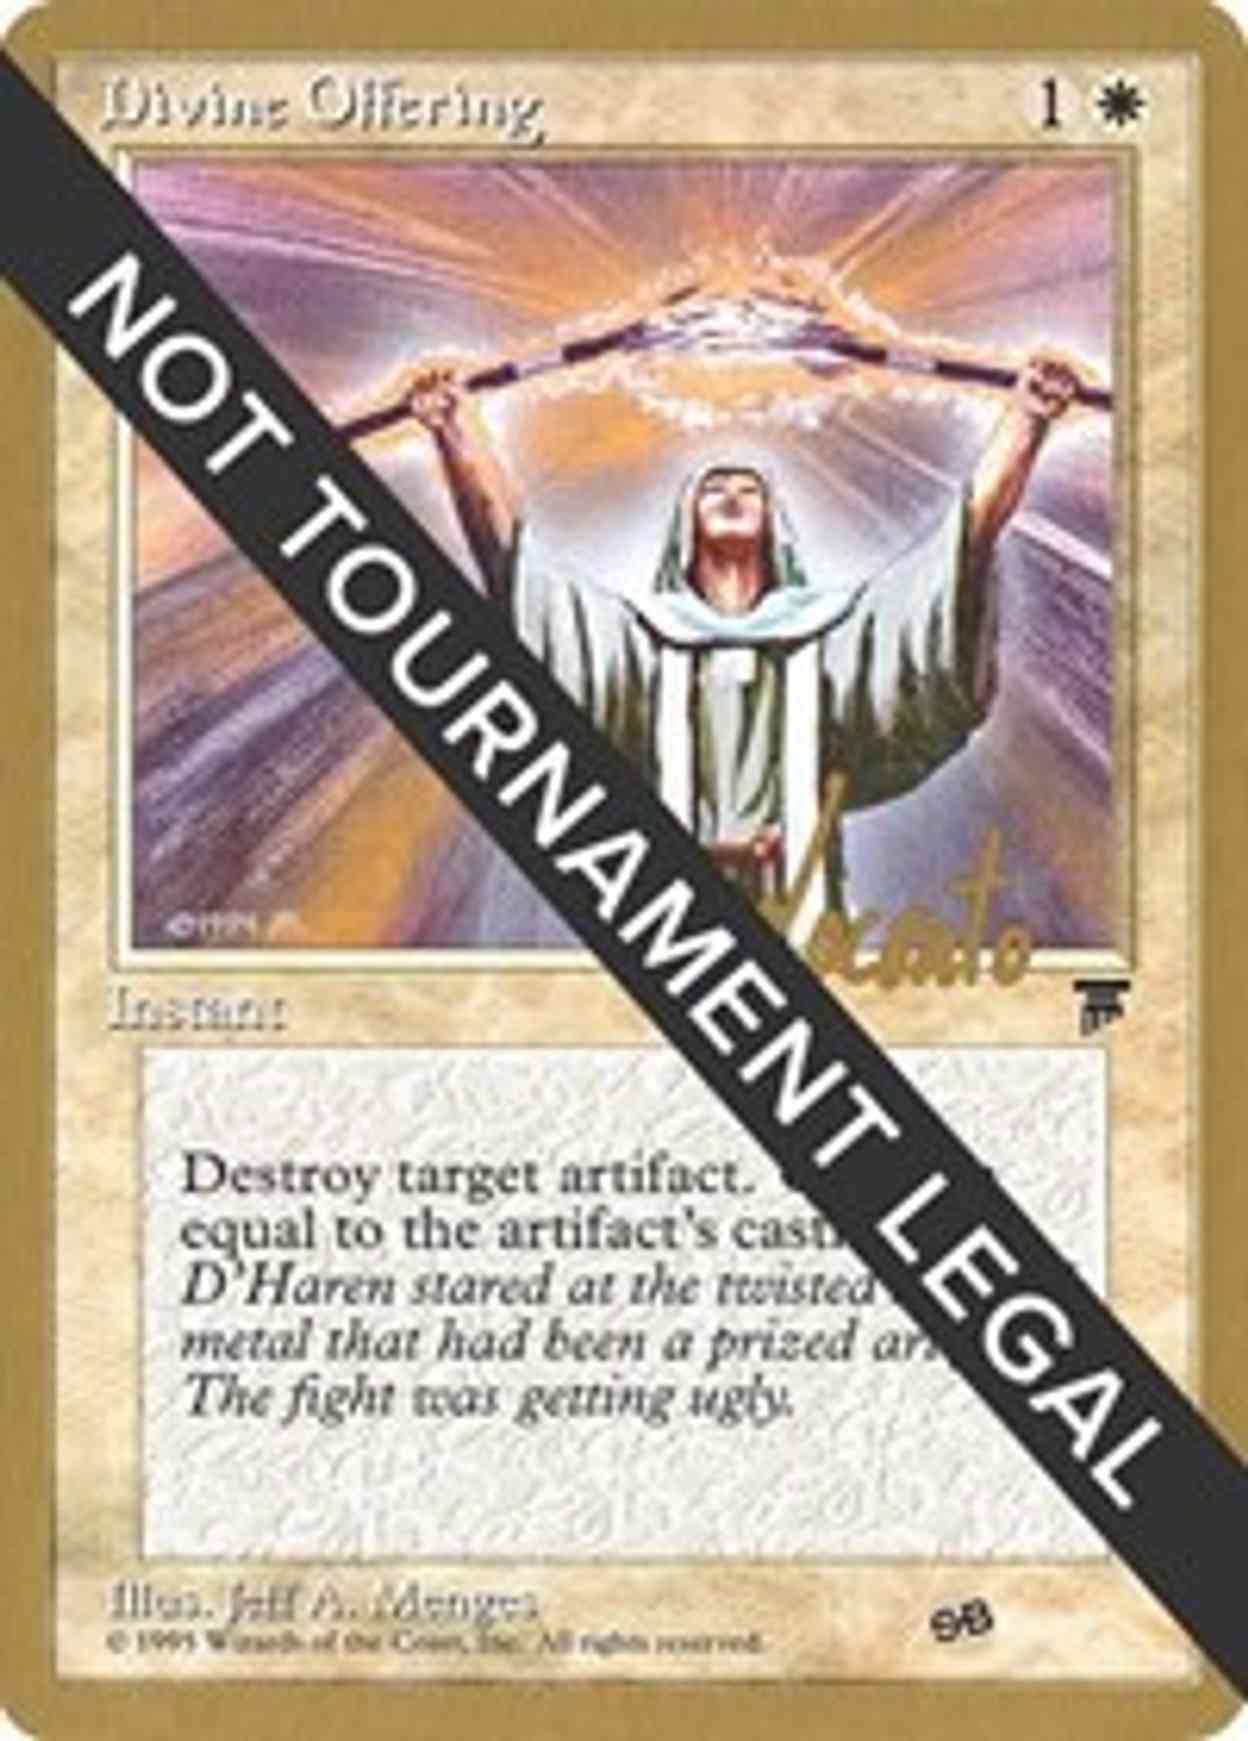 Divine Offering - 1996 Michael Loconto (LEG) (SB) magic card front